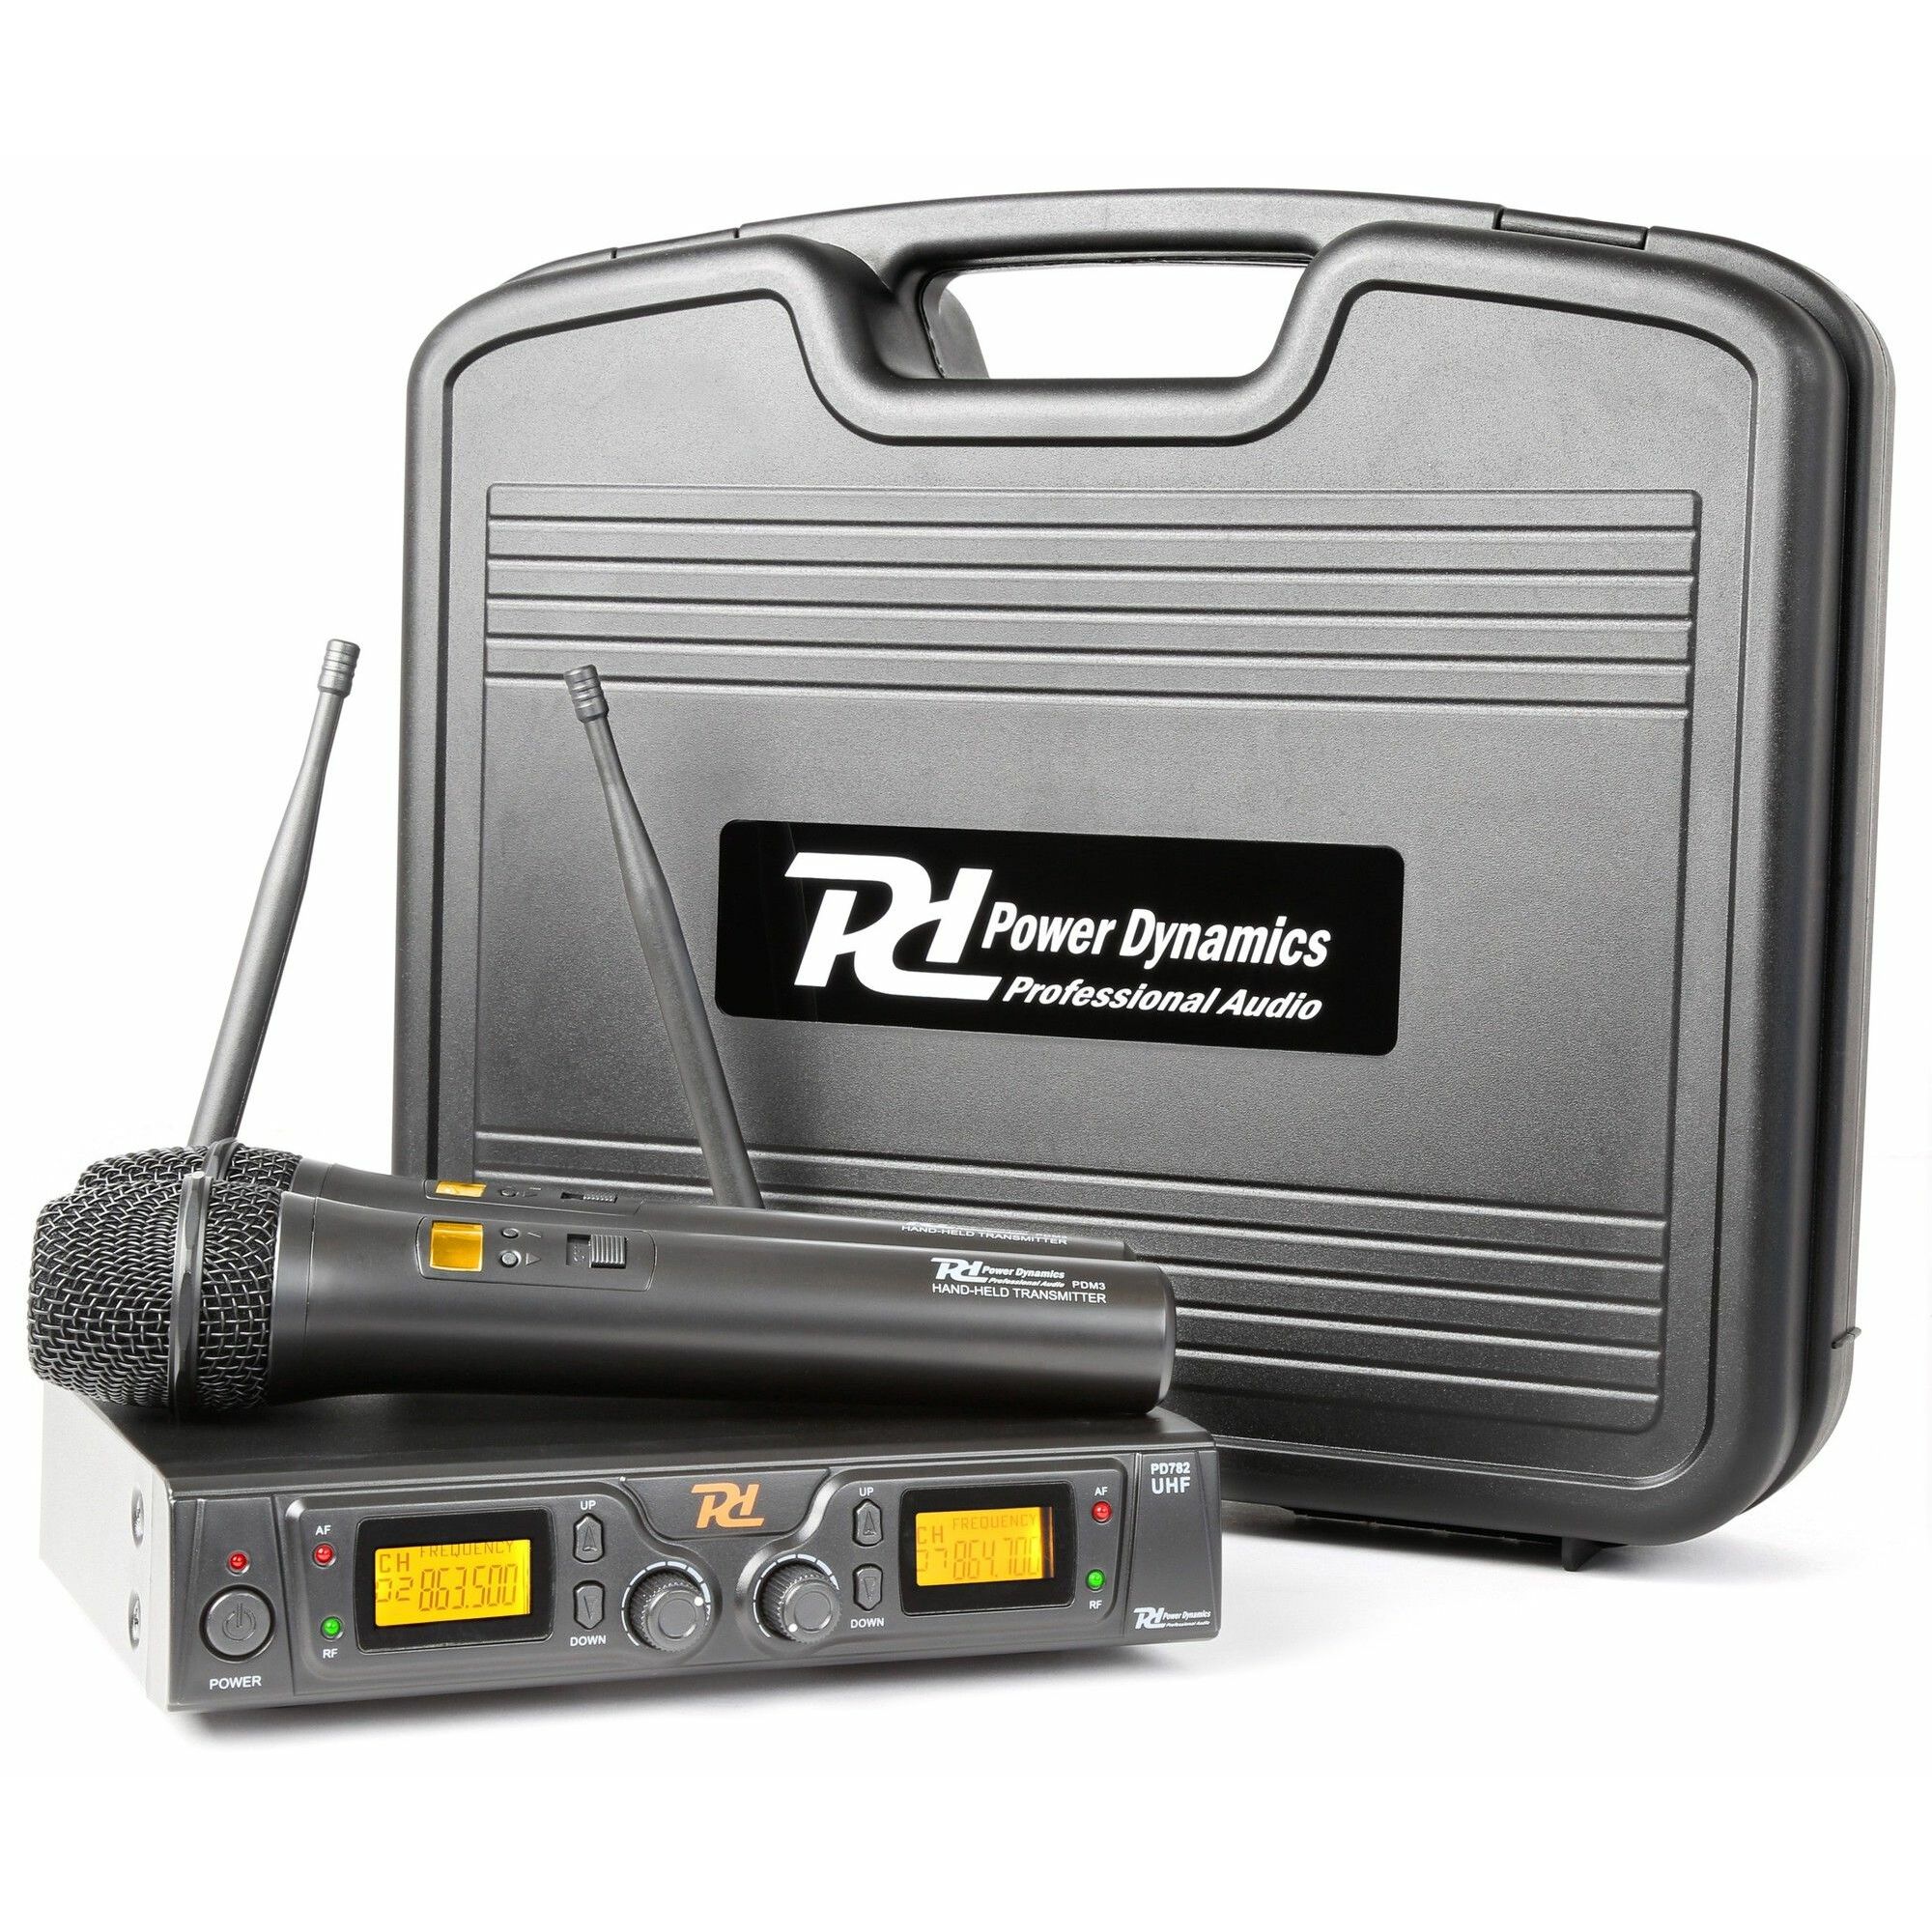 Retourdeal - Power Dynamics PD782 (UHF) Draadloos microfoonsysteem duo